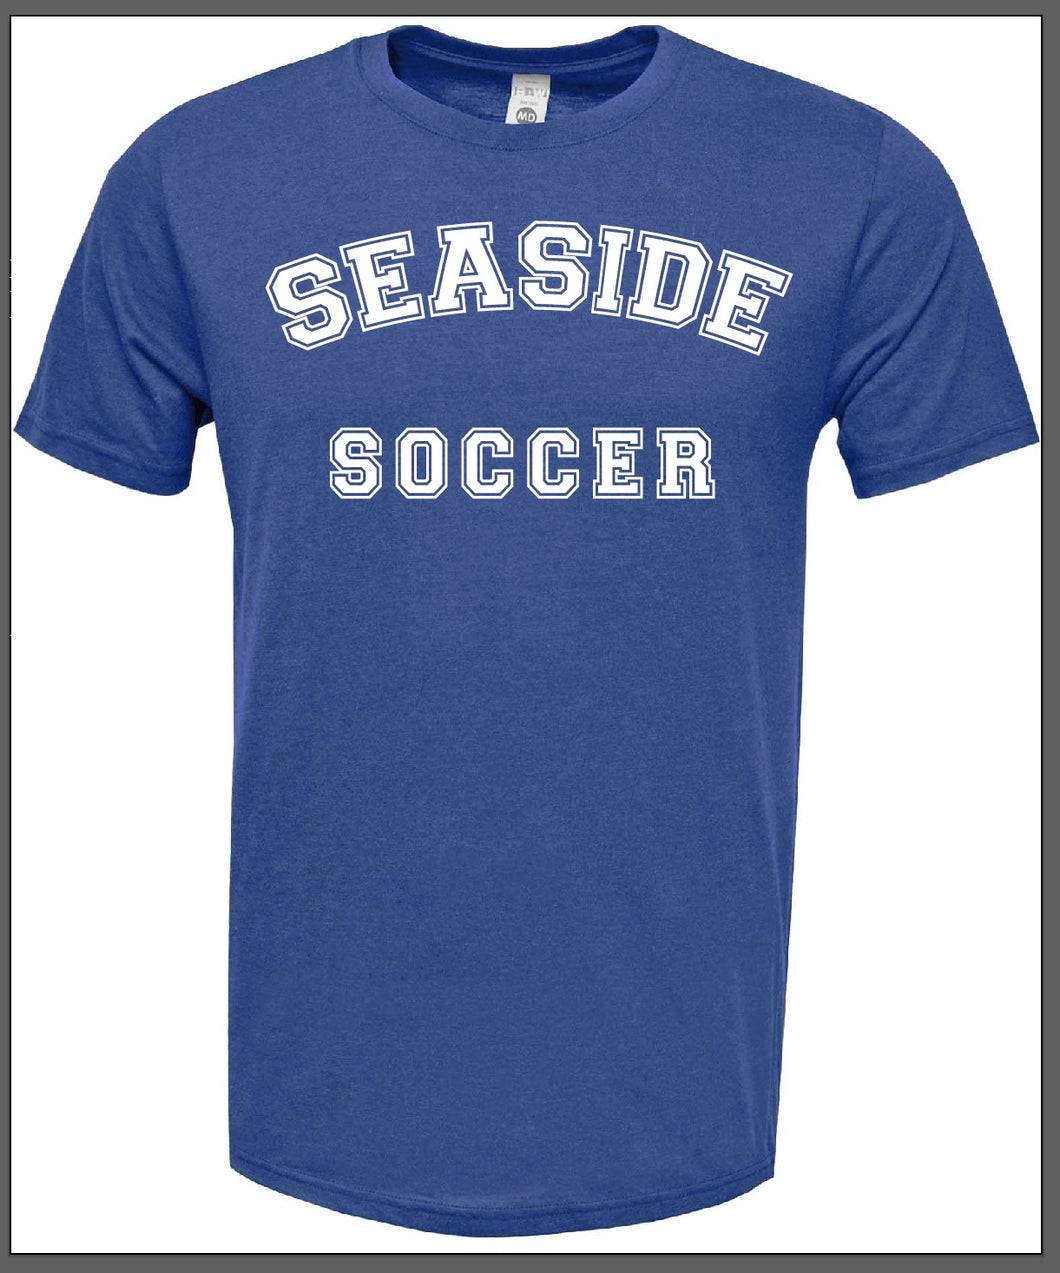 Seaside Soccer Athletic Tee - Royal Blue